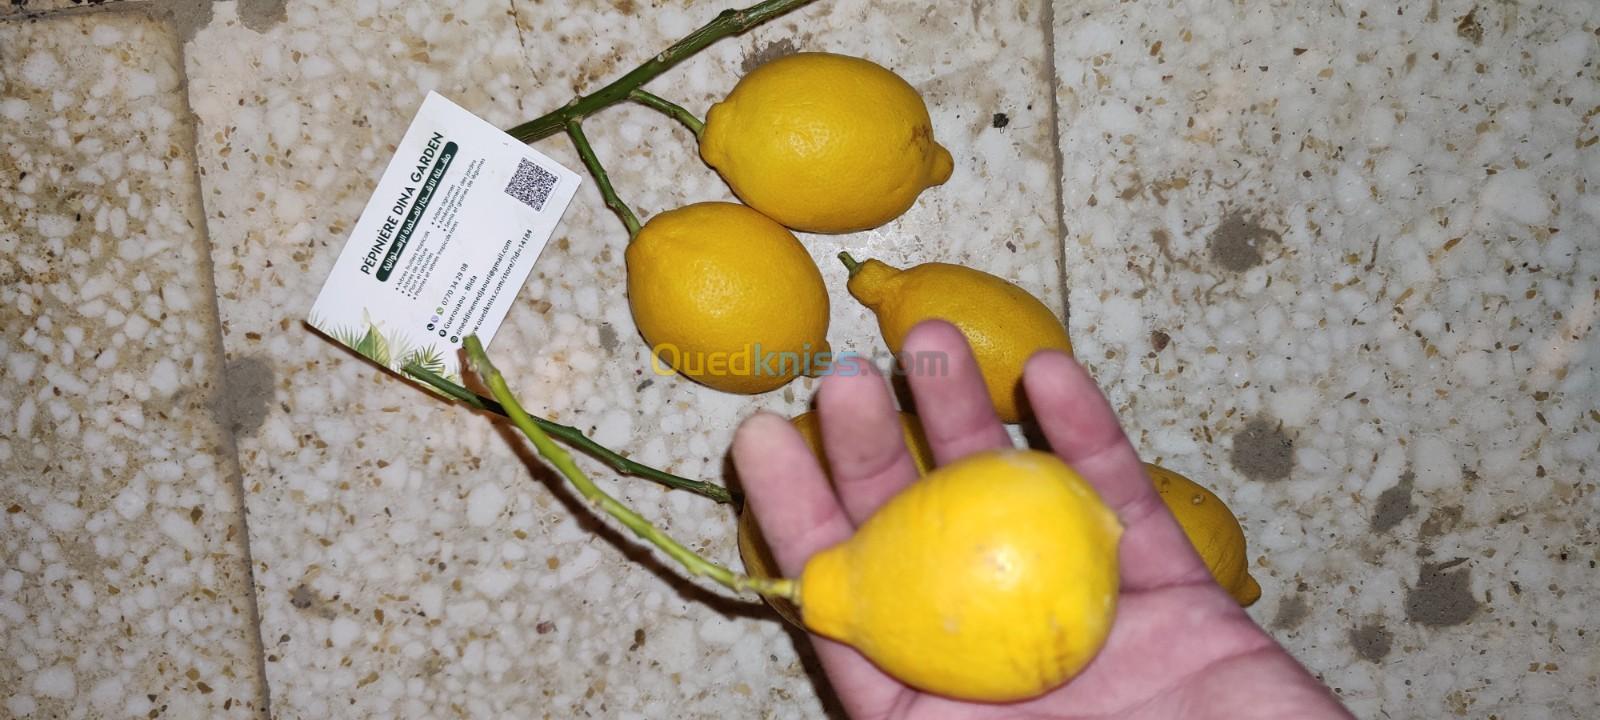 Citron Eurêka ليمون الوريكا 4فصول 